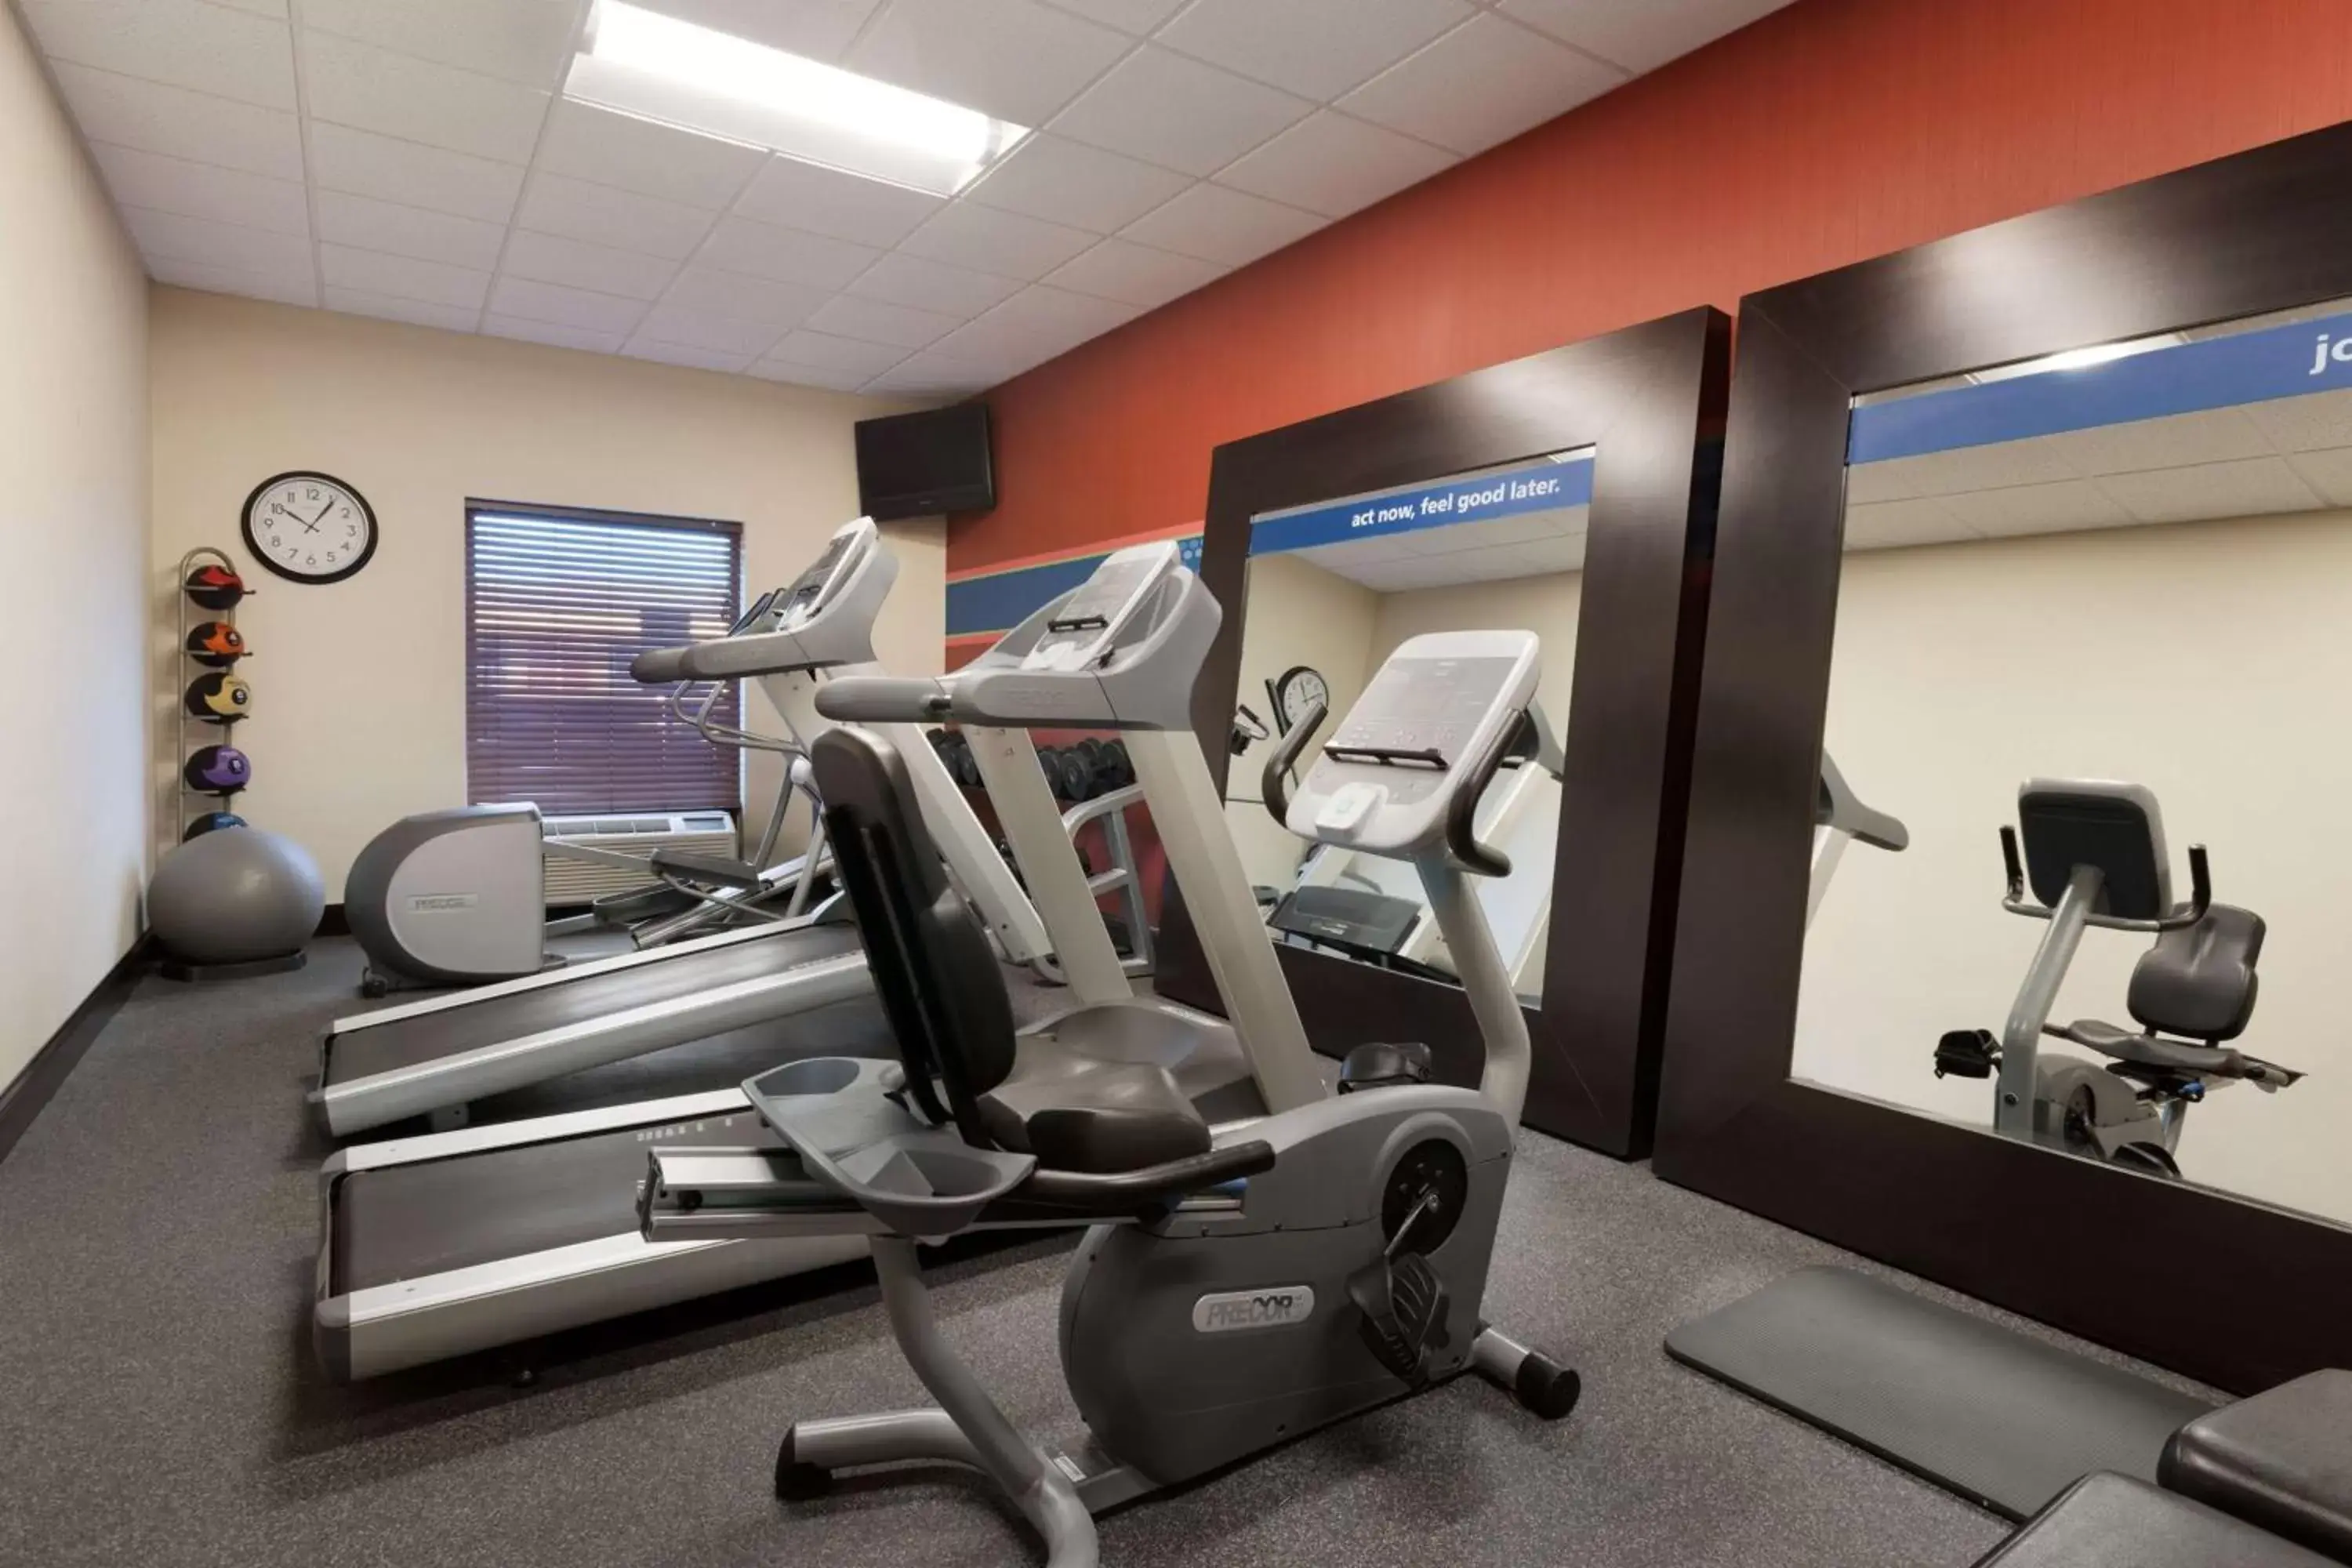 Fitness centre/facilities, Fitness Center/Facilities in Hampton Inn & Suites Birmingham Airport Area